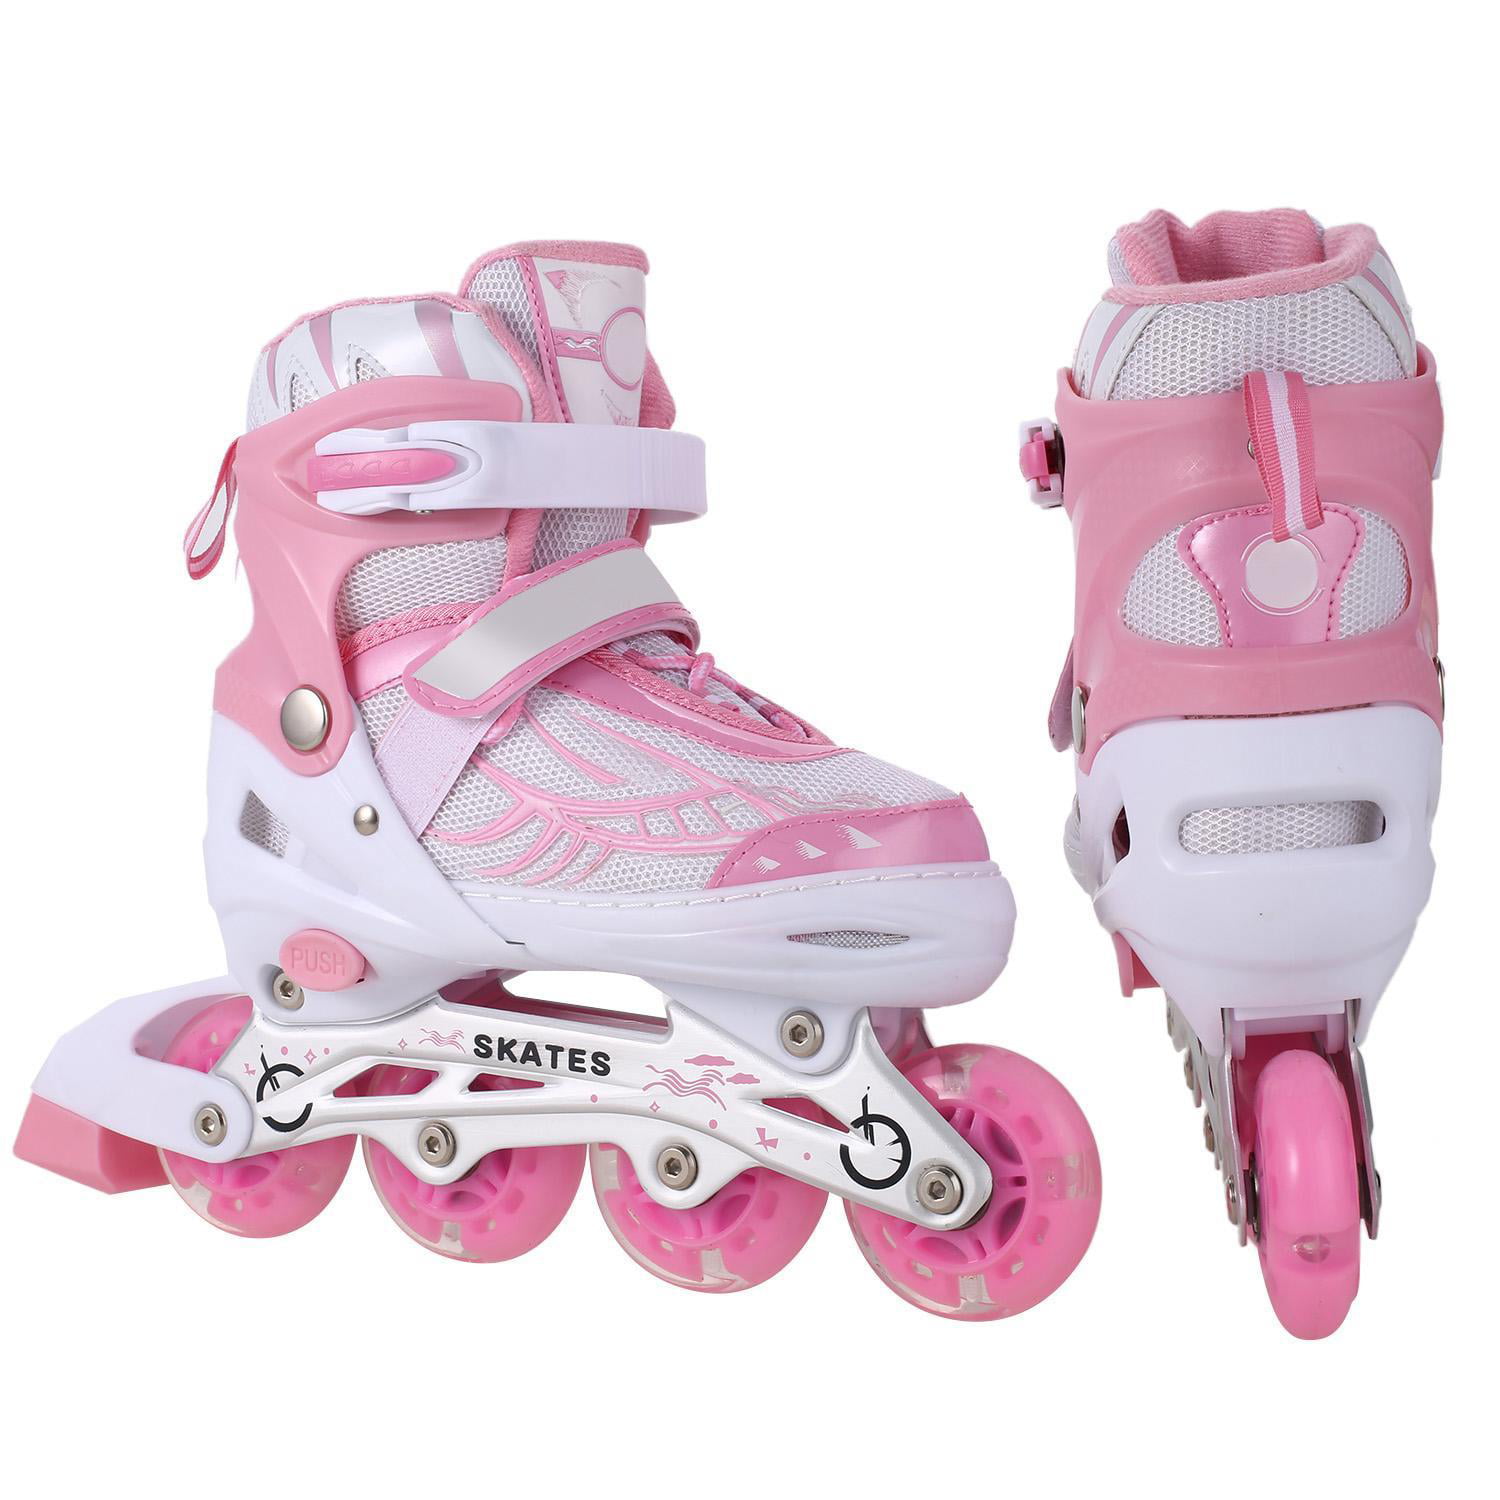 WWahuayuan Adjustable Roller Skates,4 Size Adjustable Light up Roller Skates with Light up Wheels Size for Girls Boys for Kids